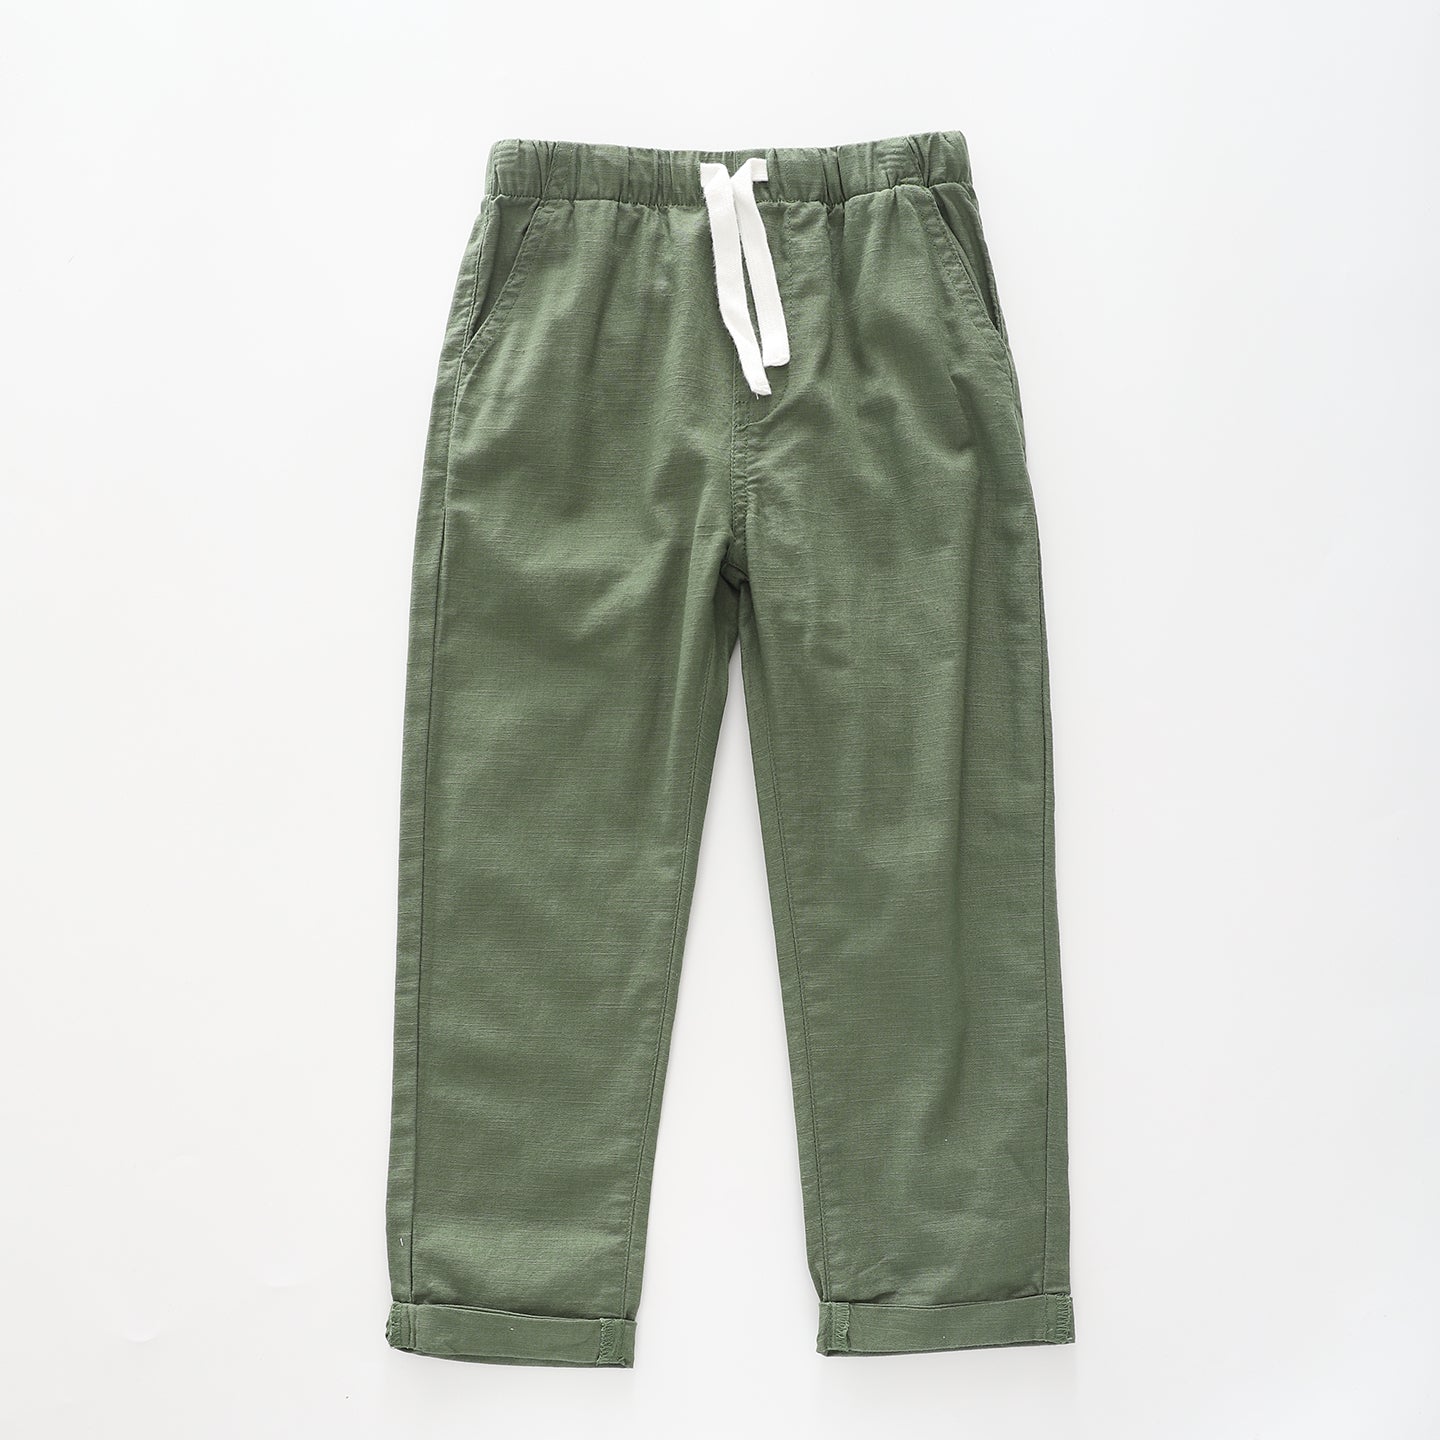 Boy's Khaki Green Linen Pants With Drawstring Waist